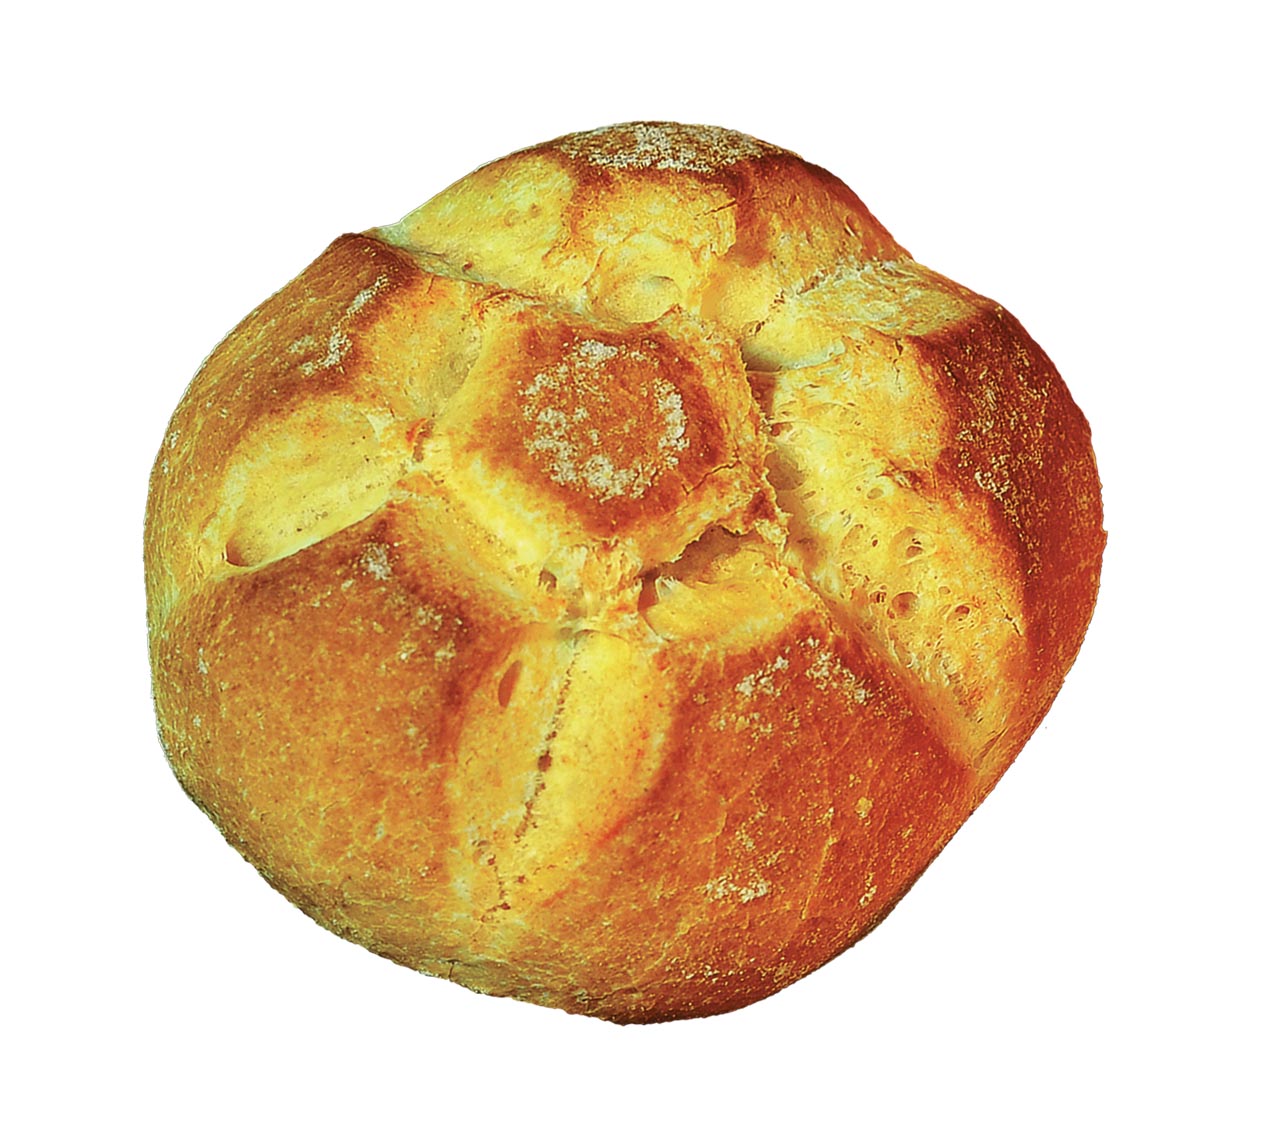 Italian gourmet bread rolls 30g